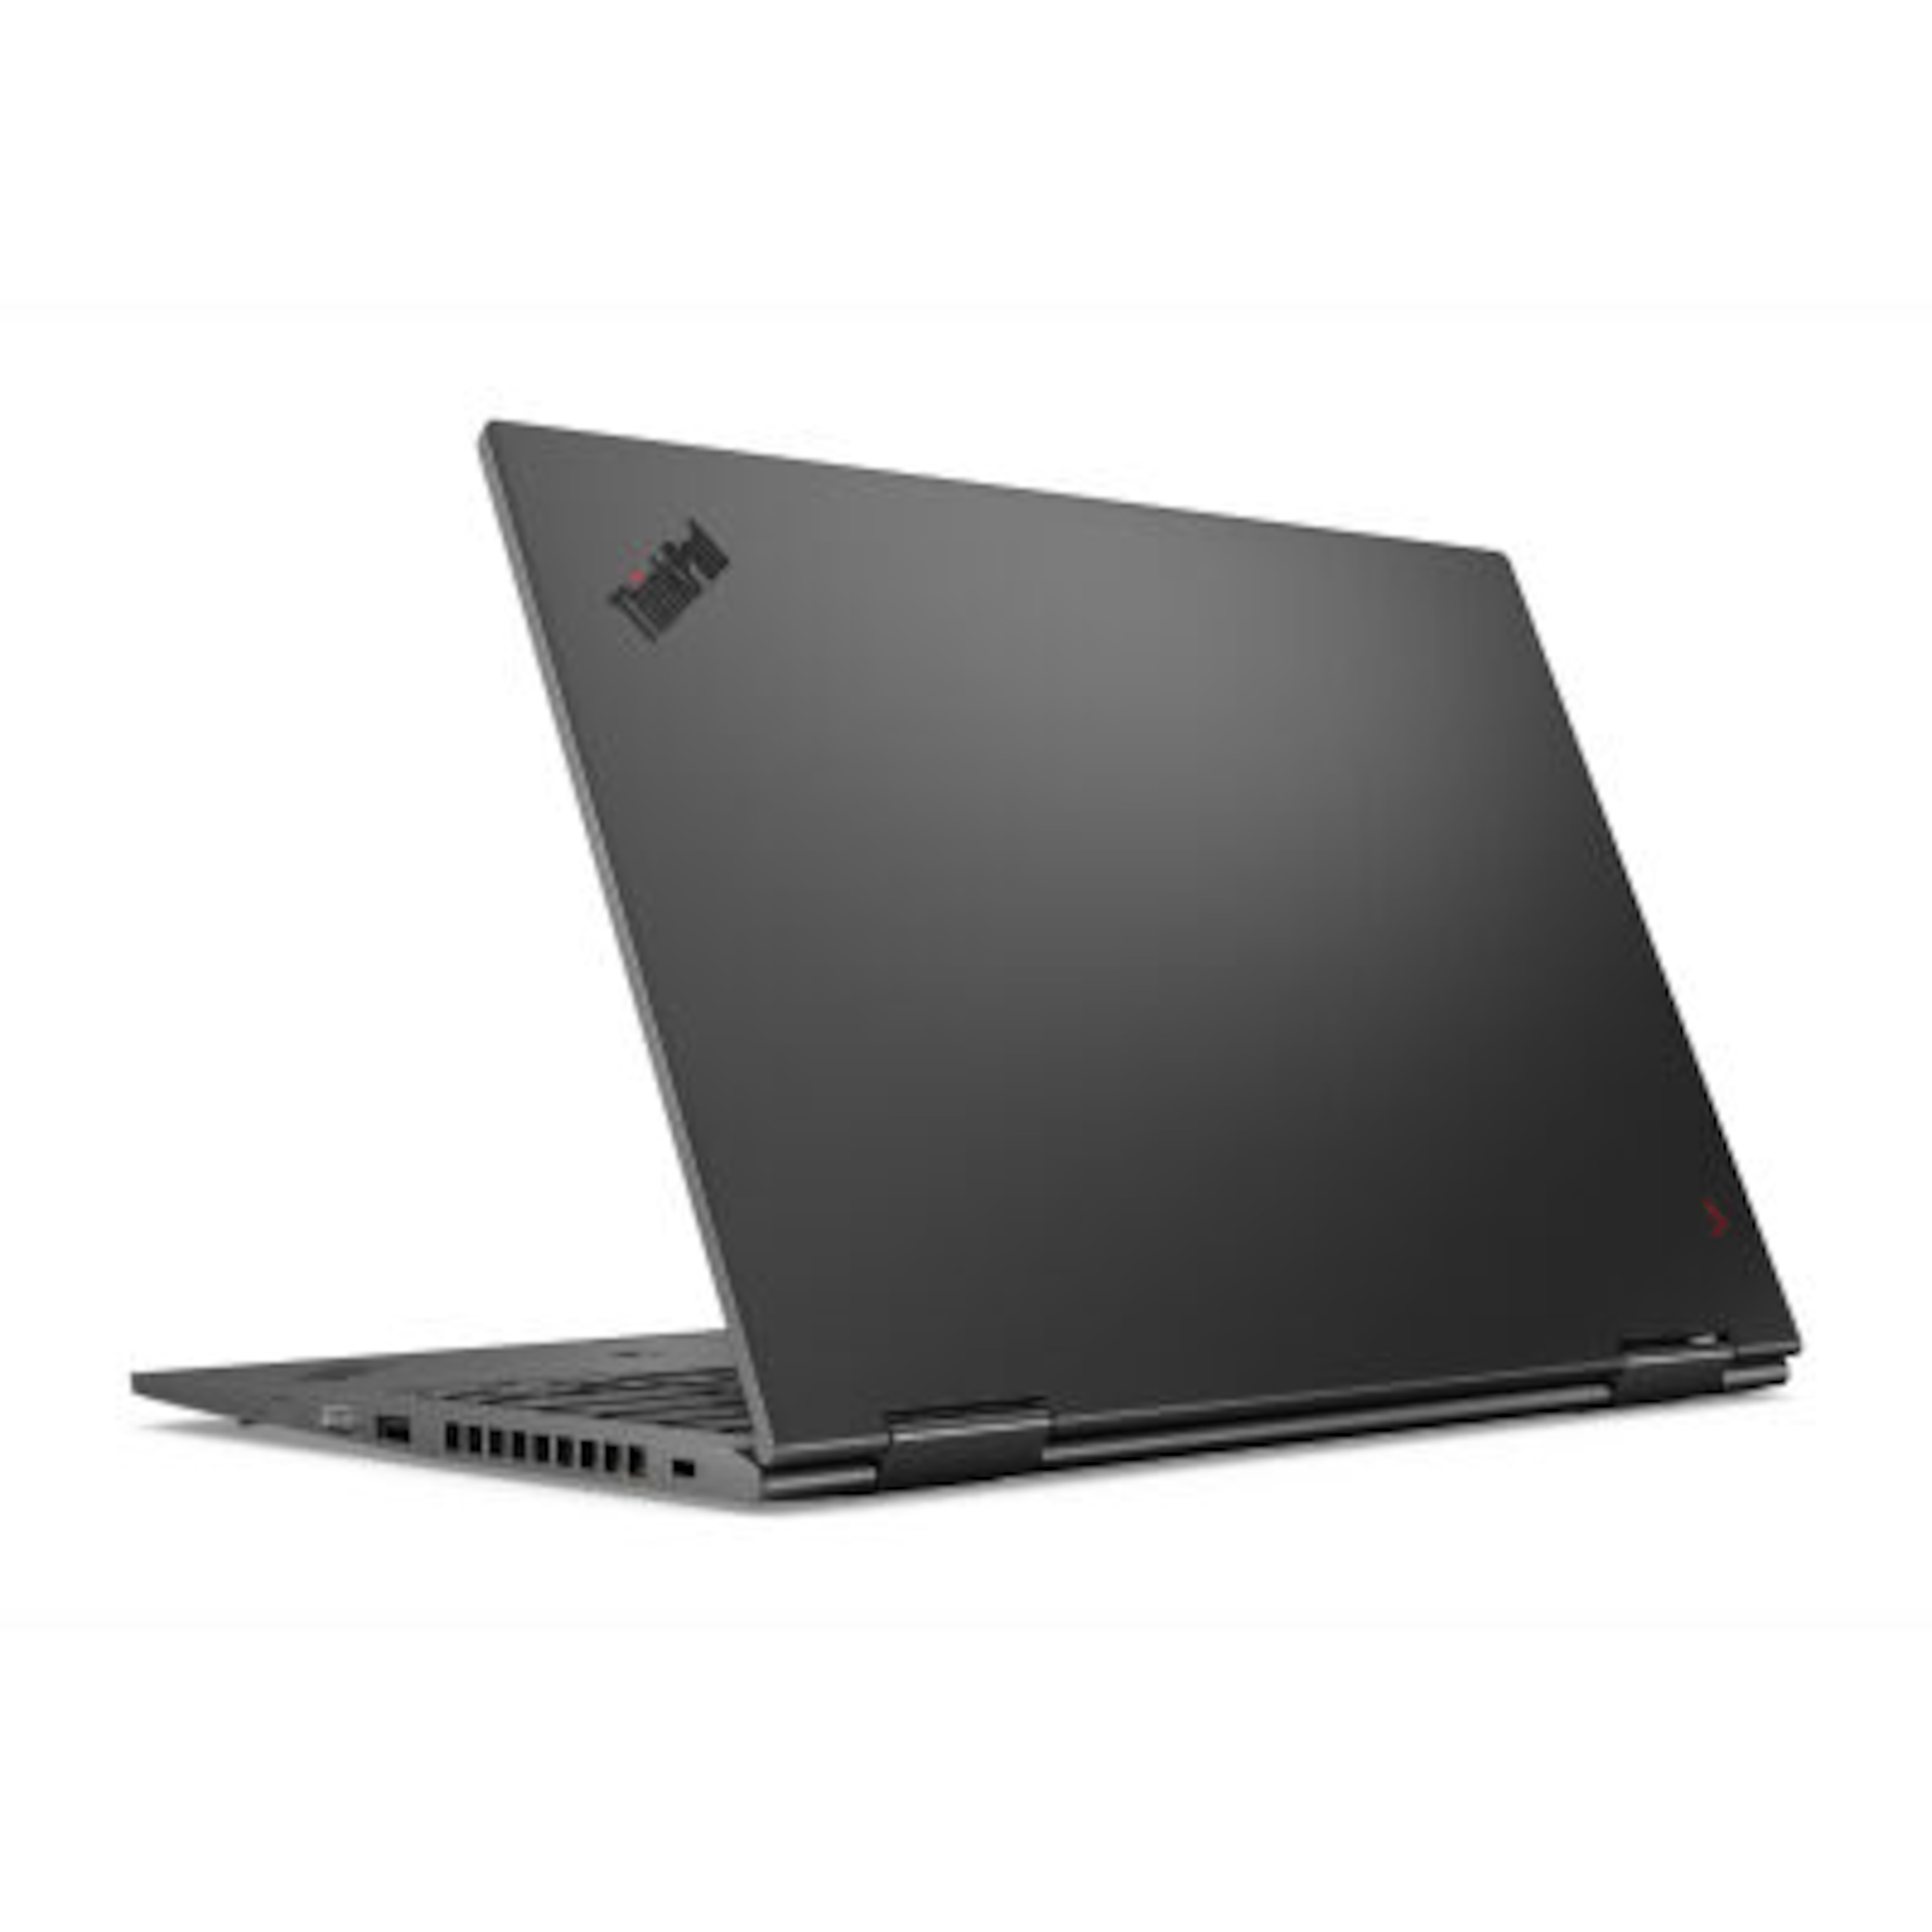 LENOVO ThinkPad™ X1 Yoga (4th Gen), Intel® Core™ i7-8565U, Windows 10 Pro, 35,5 cm (14") WQHD Display, 512 GB PCIe SSD, 16 GB RAM, Convertible